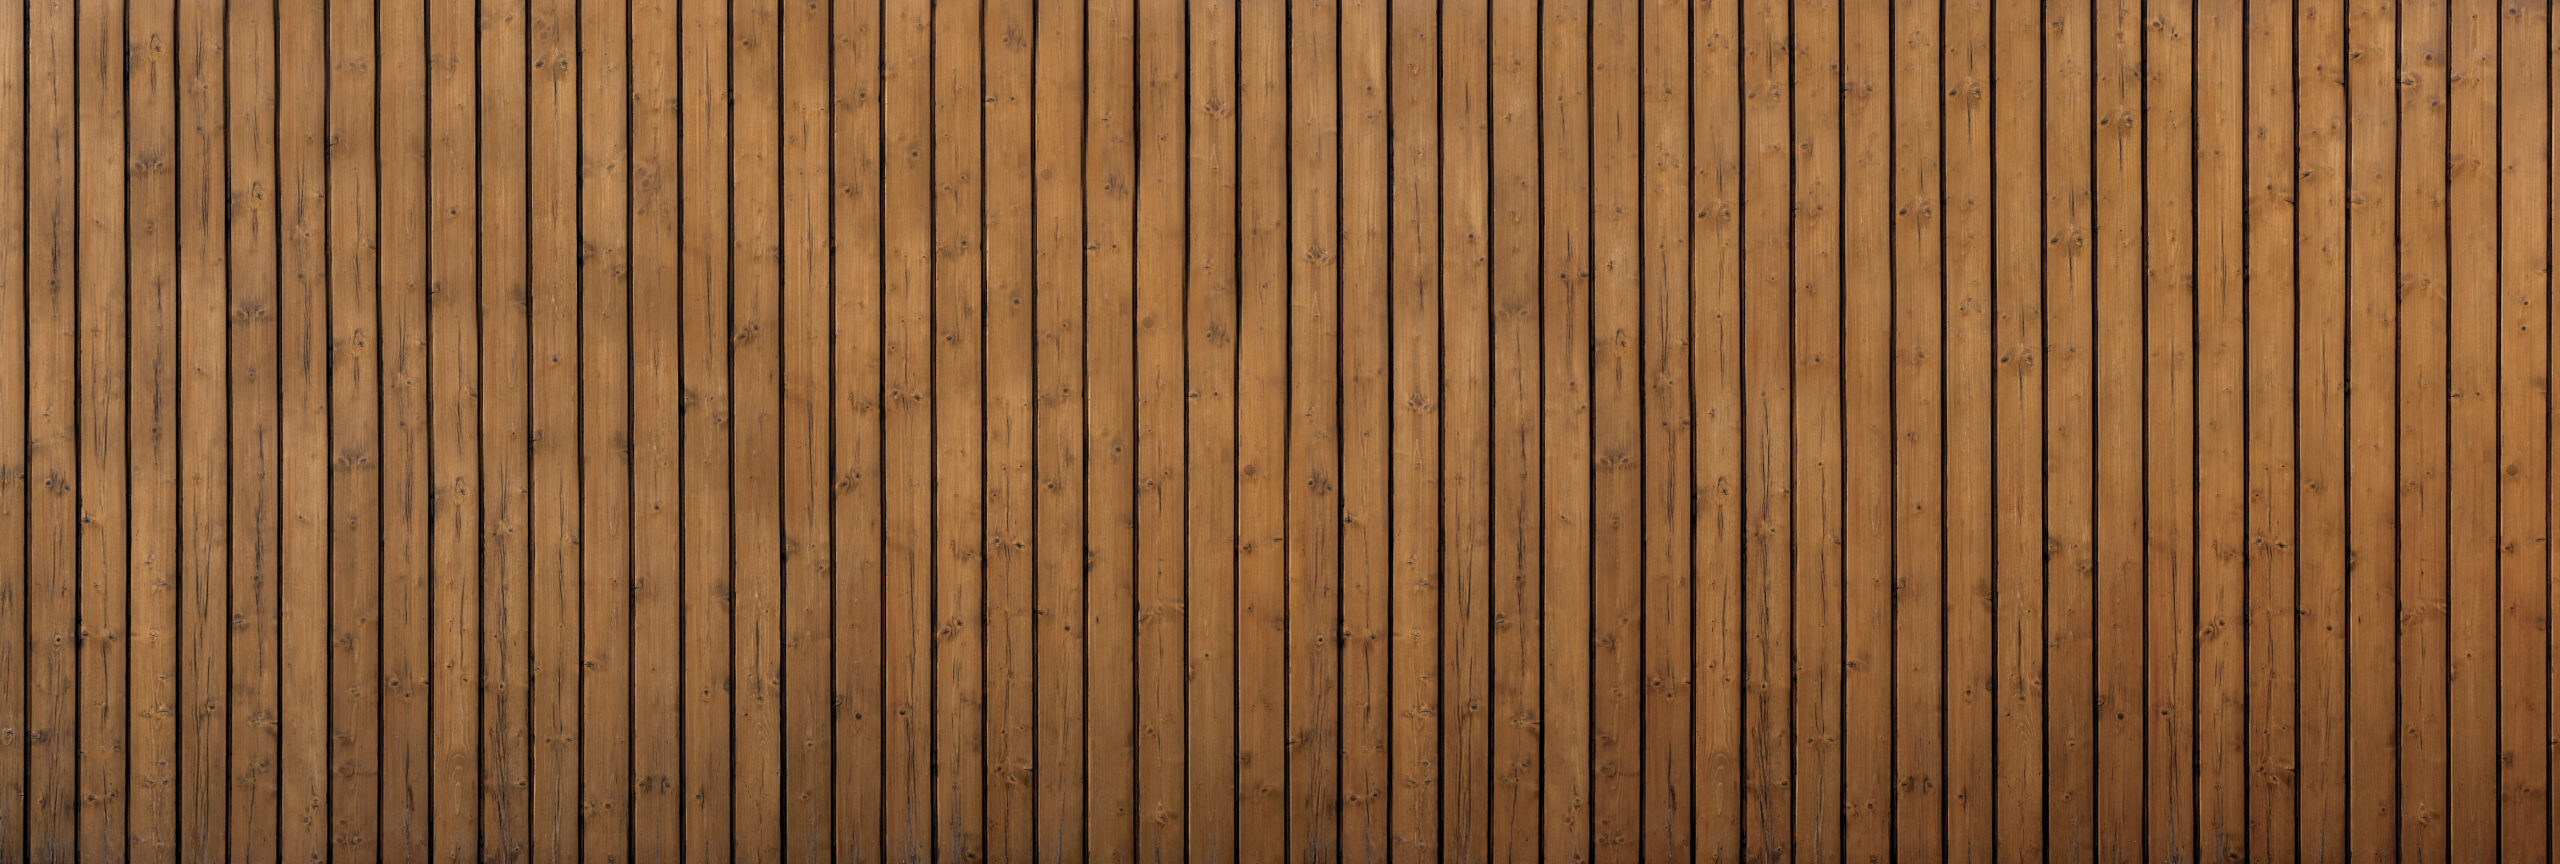 Brown vertical wood texture background